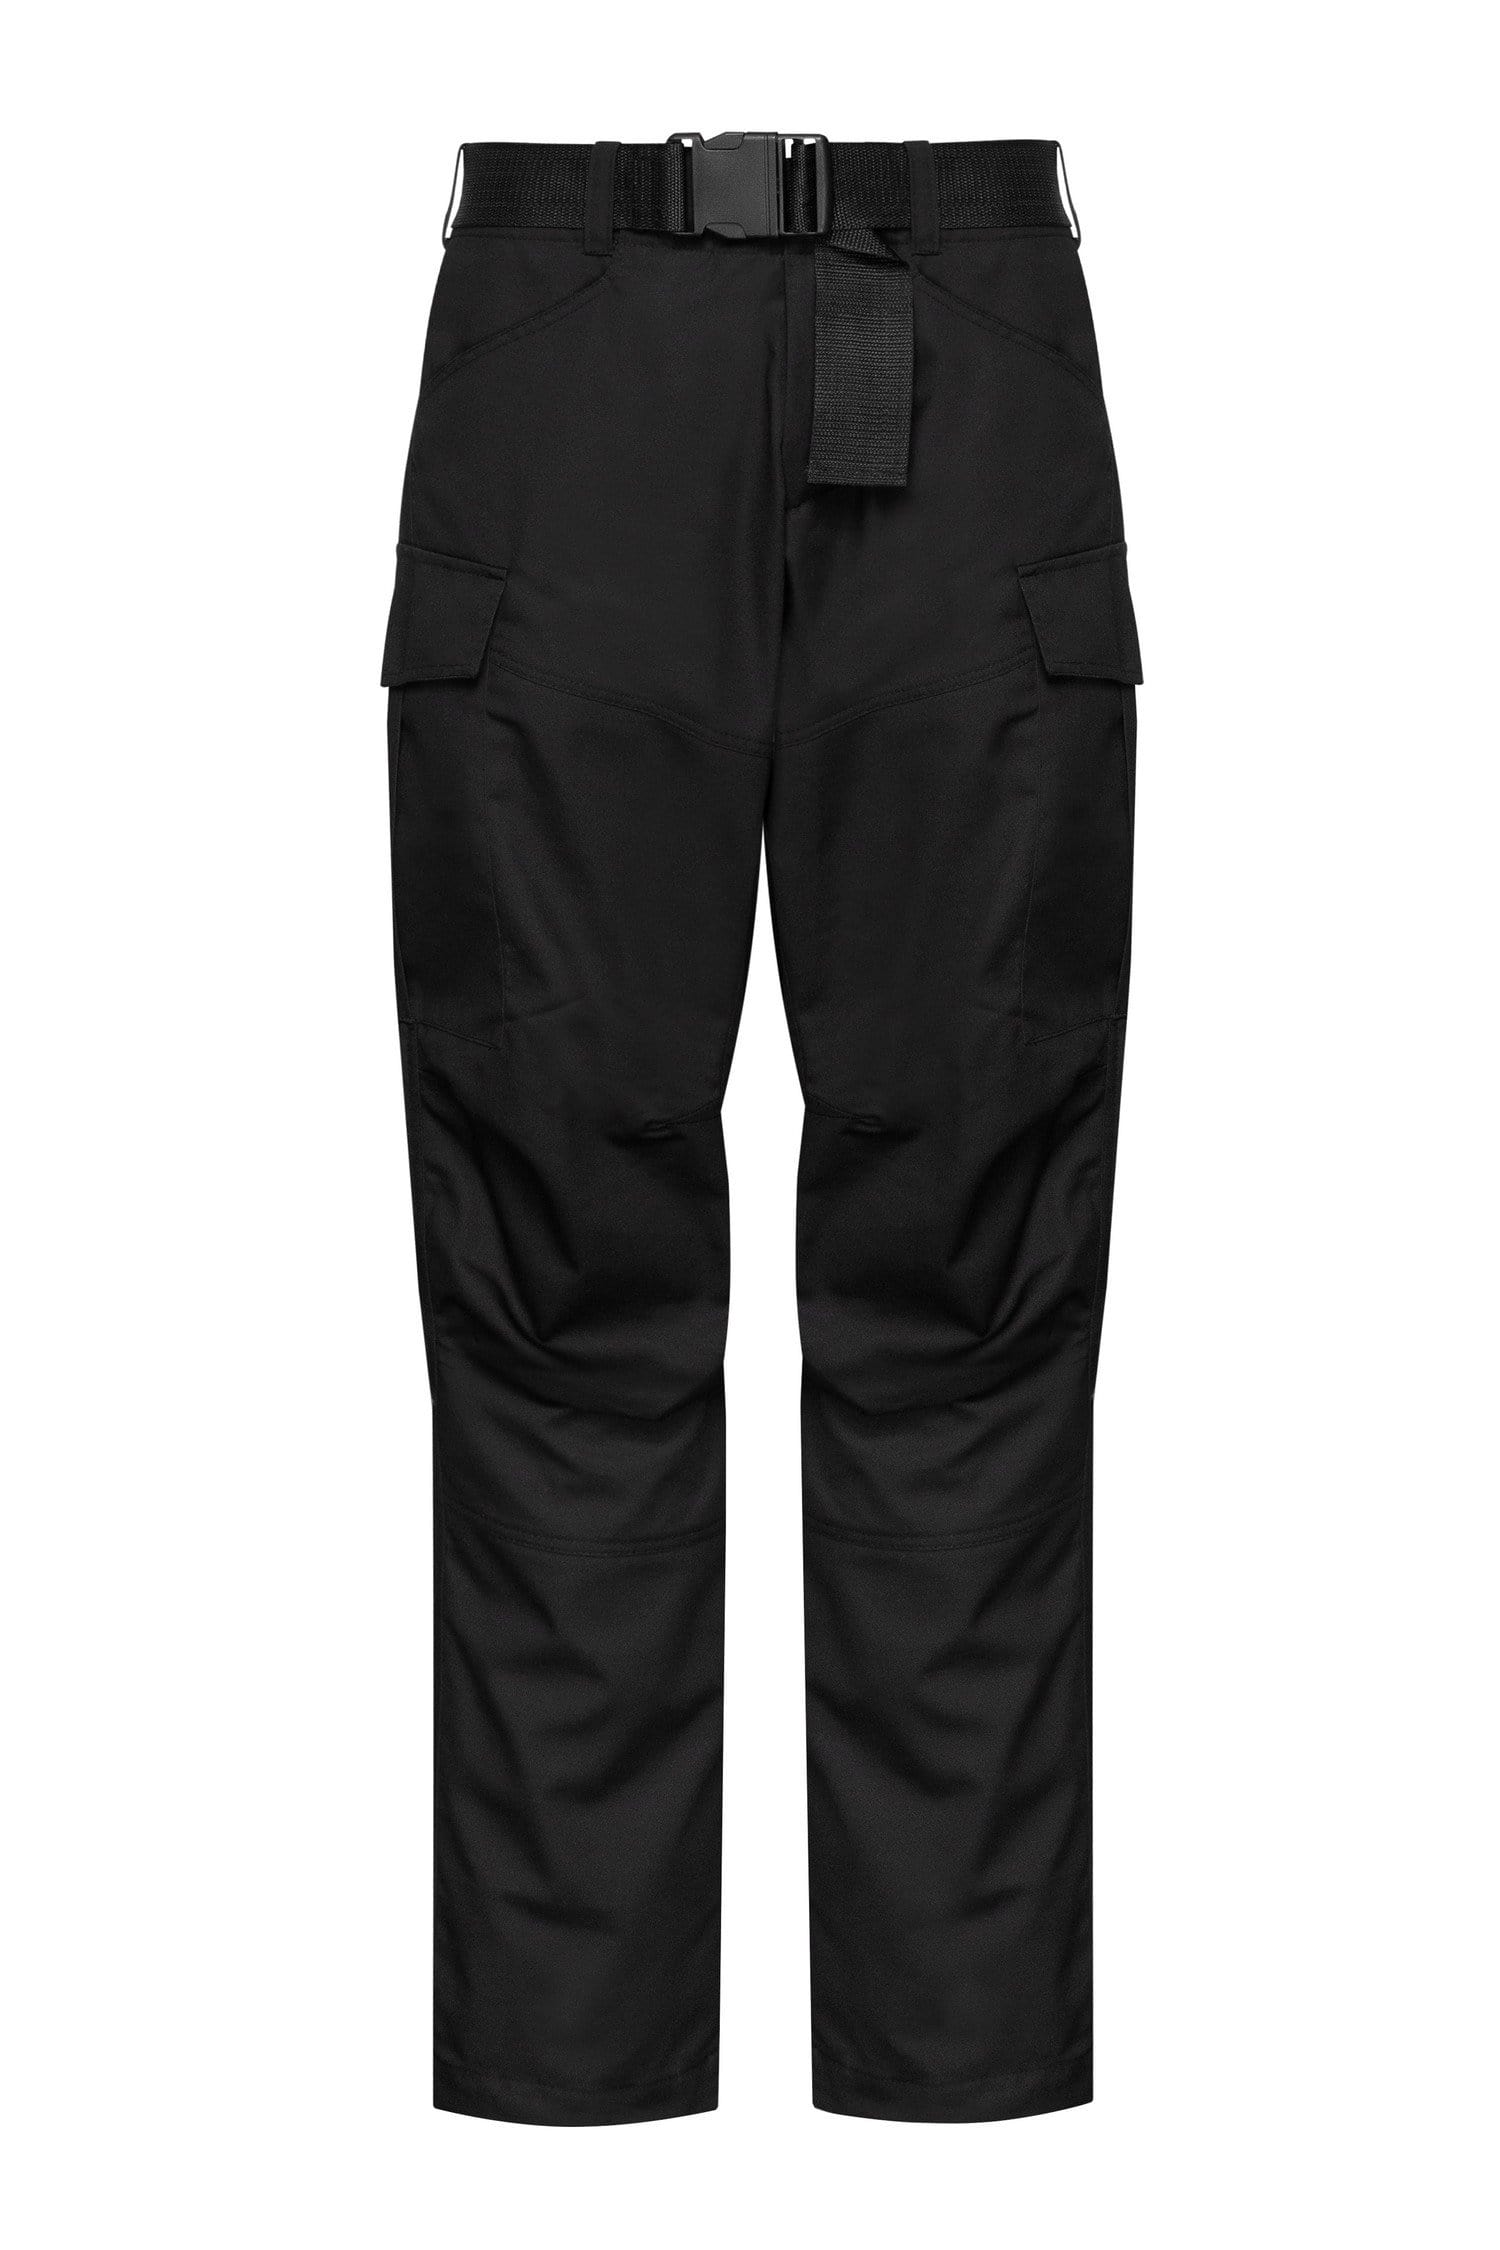 Buy Black Trousers & Pants for Men by BLACK DERBY Online | Ajio.com